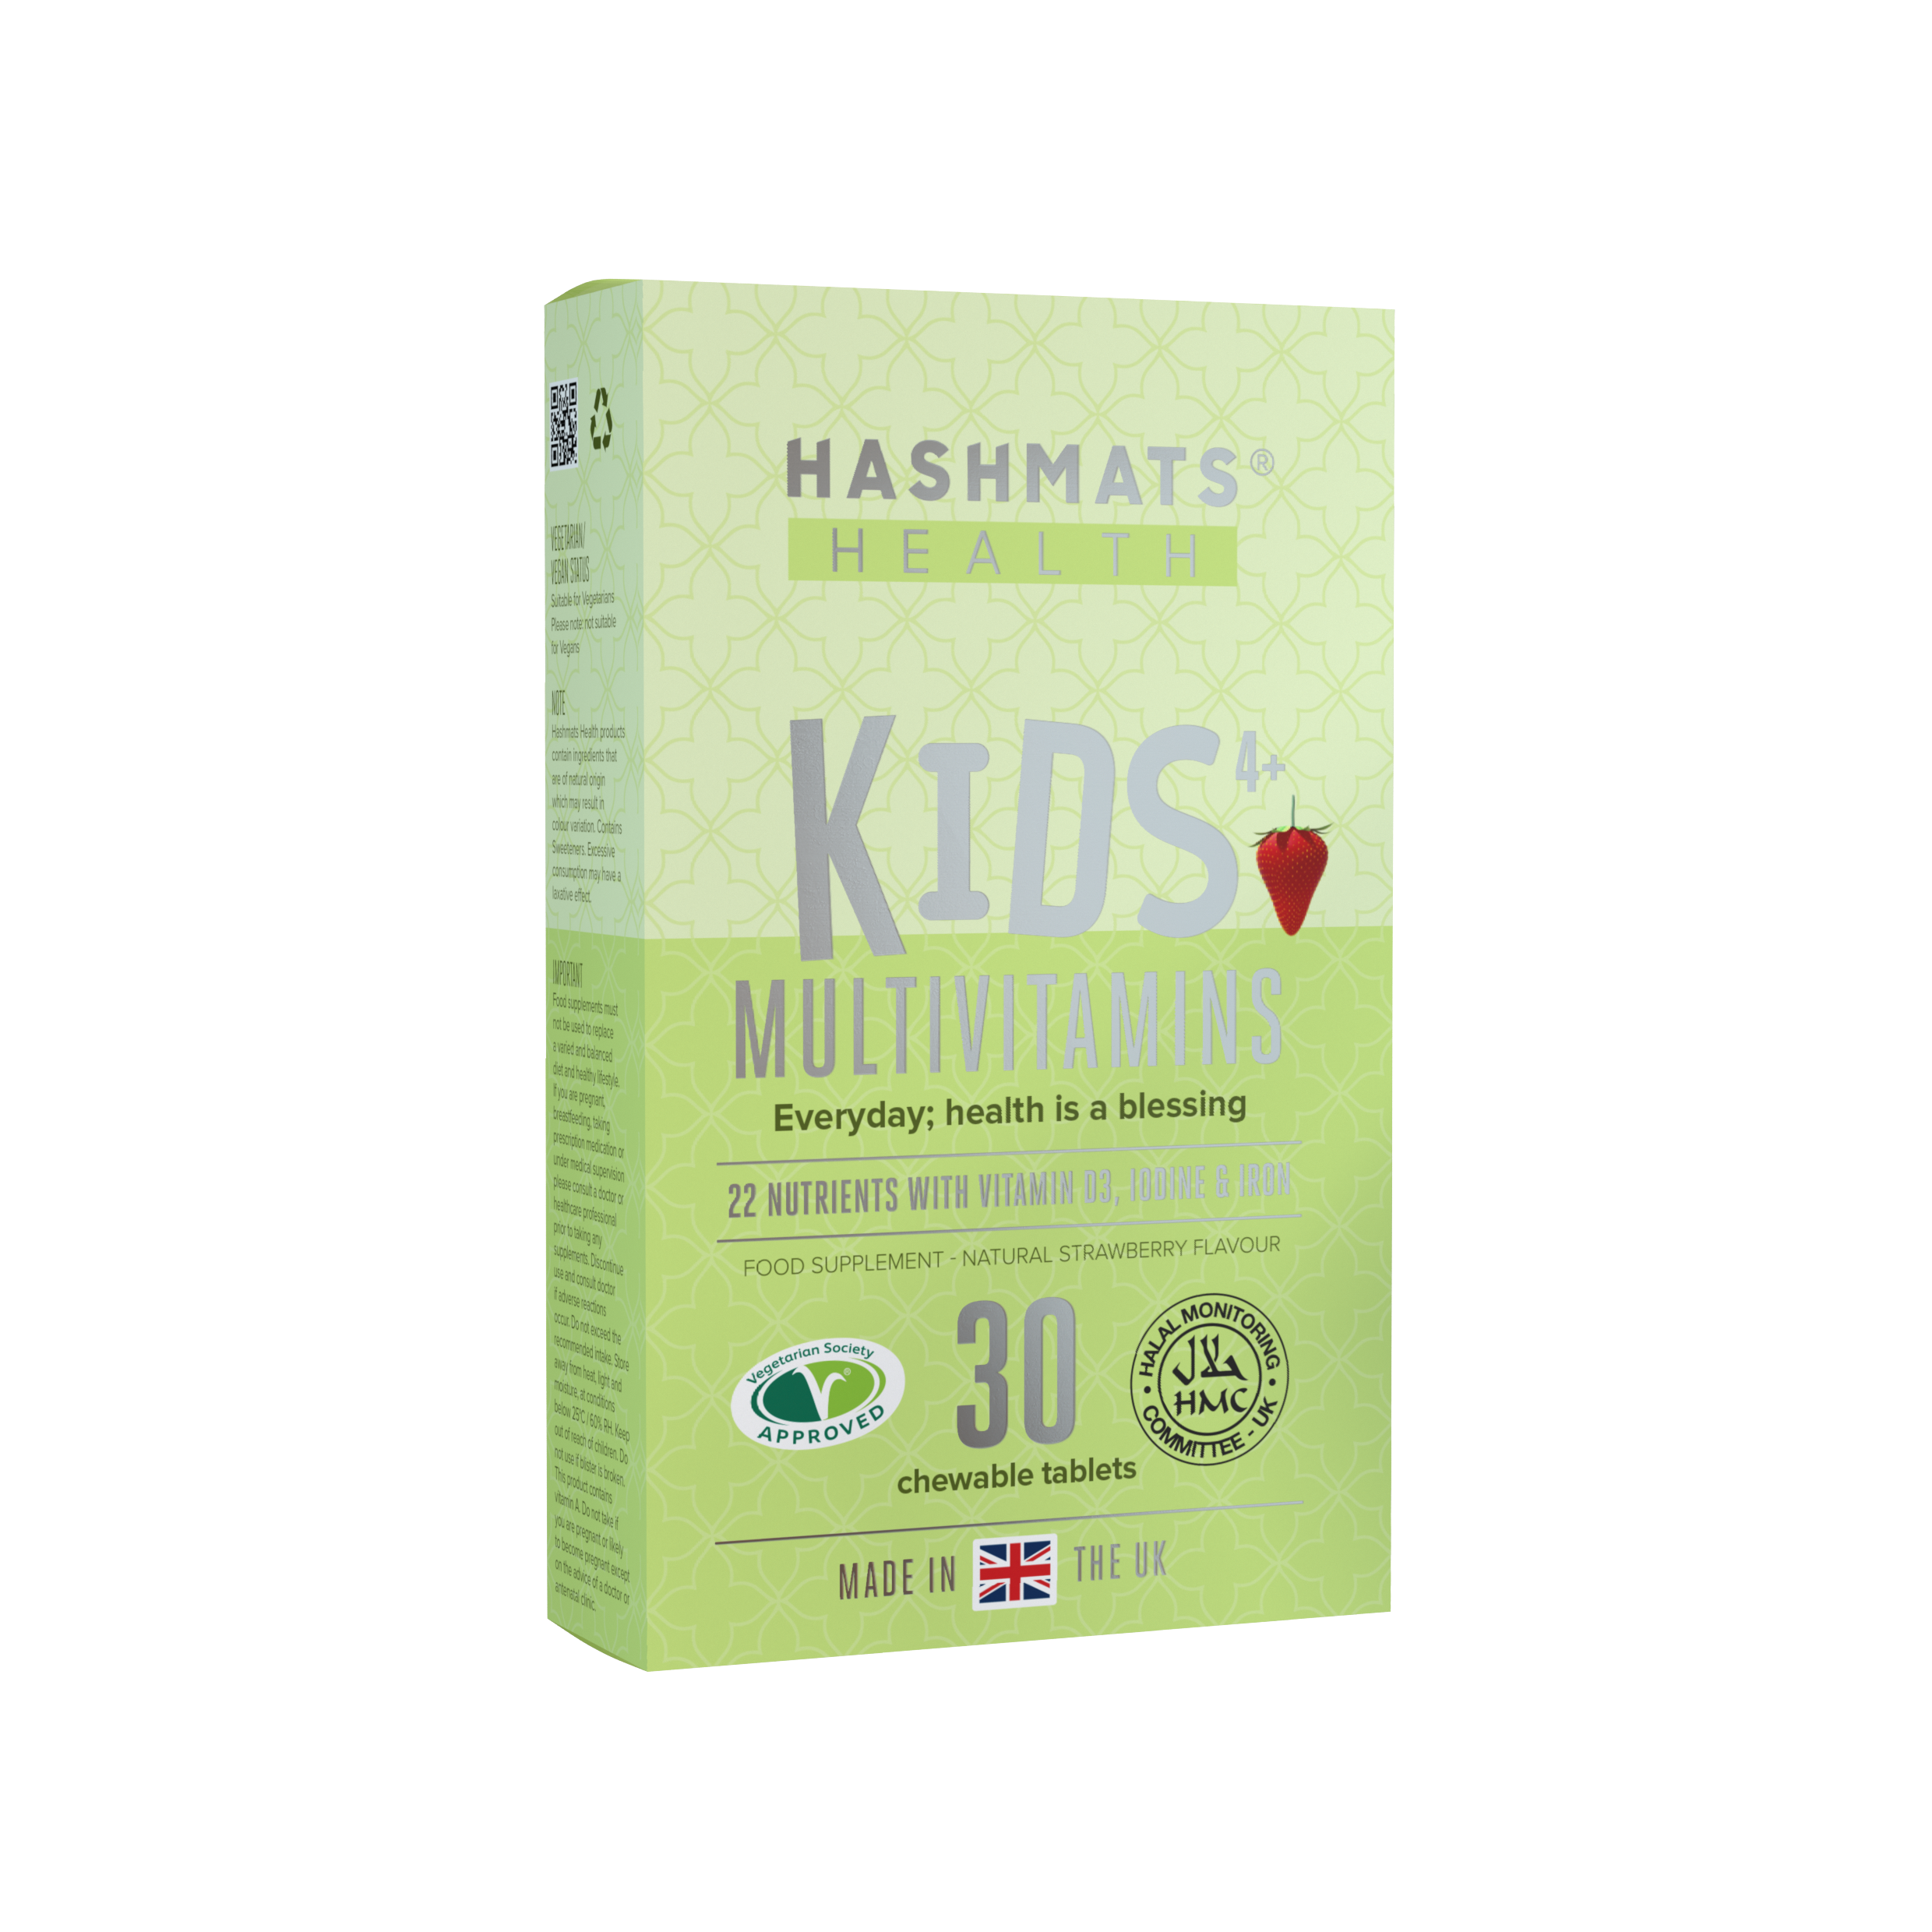 Kids Multivitamins Chewable - 21 Nutrients by HASHMATS®